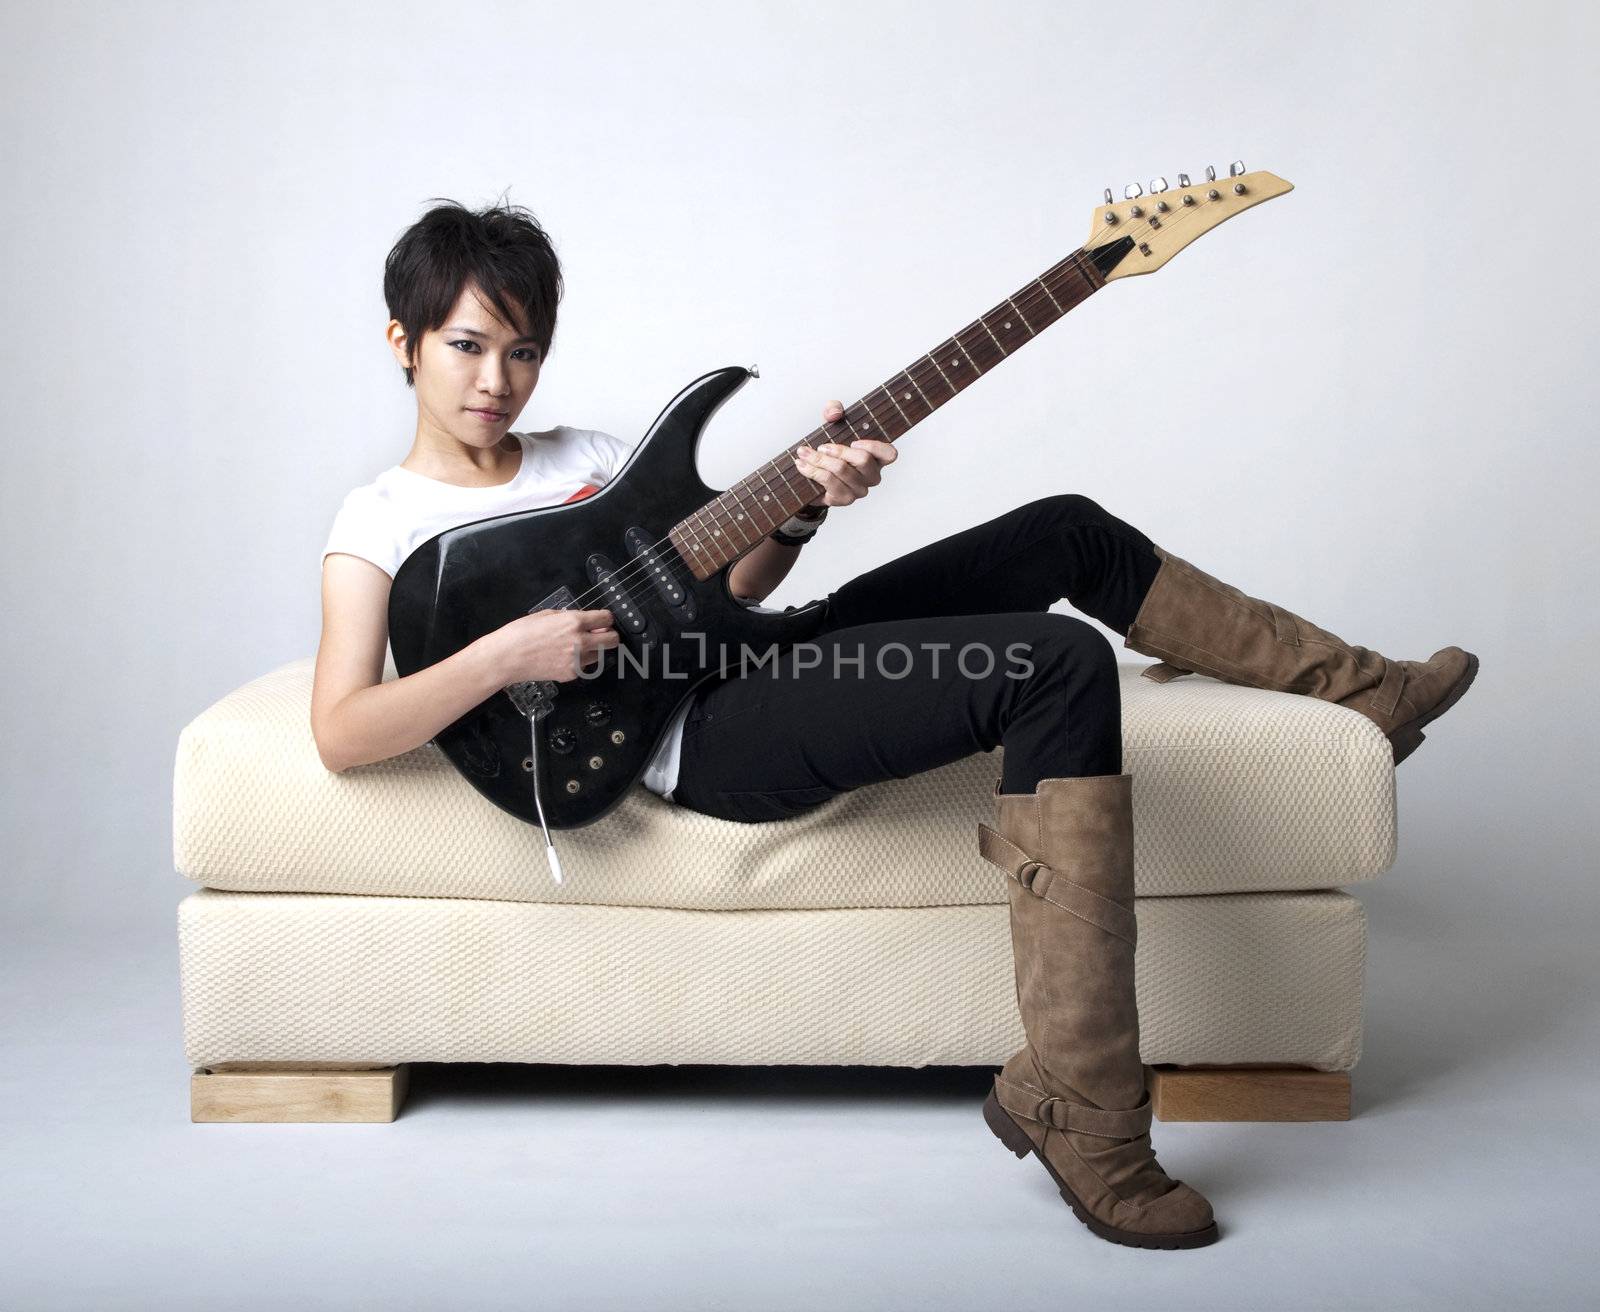 Punk Rockstar holding a guitar sitting on sofa.